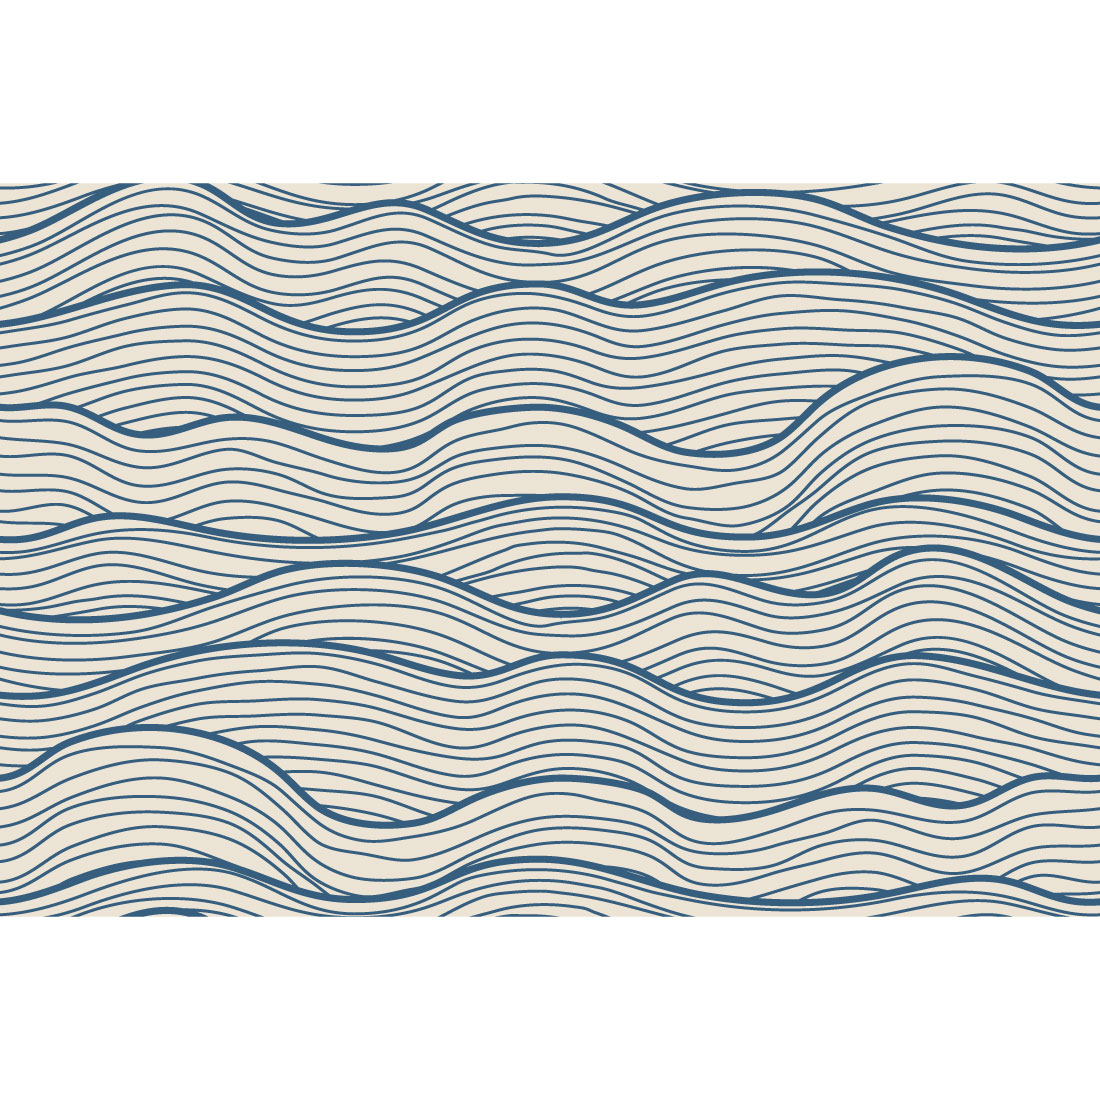 Minimalist Waves Seamless Patterns cover image.